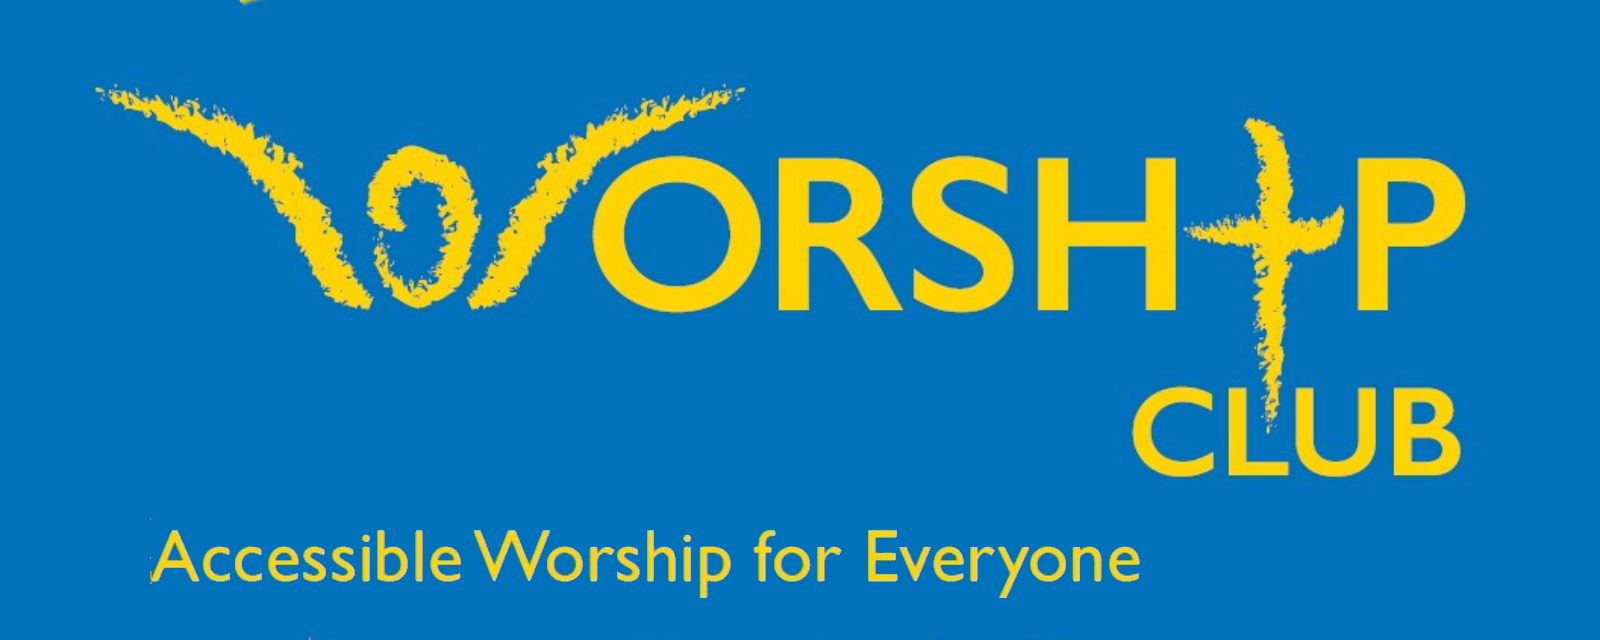 Worship Club logo